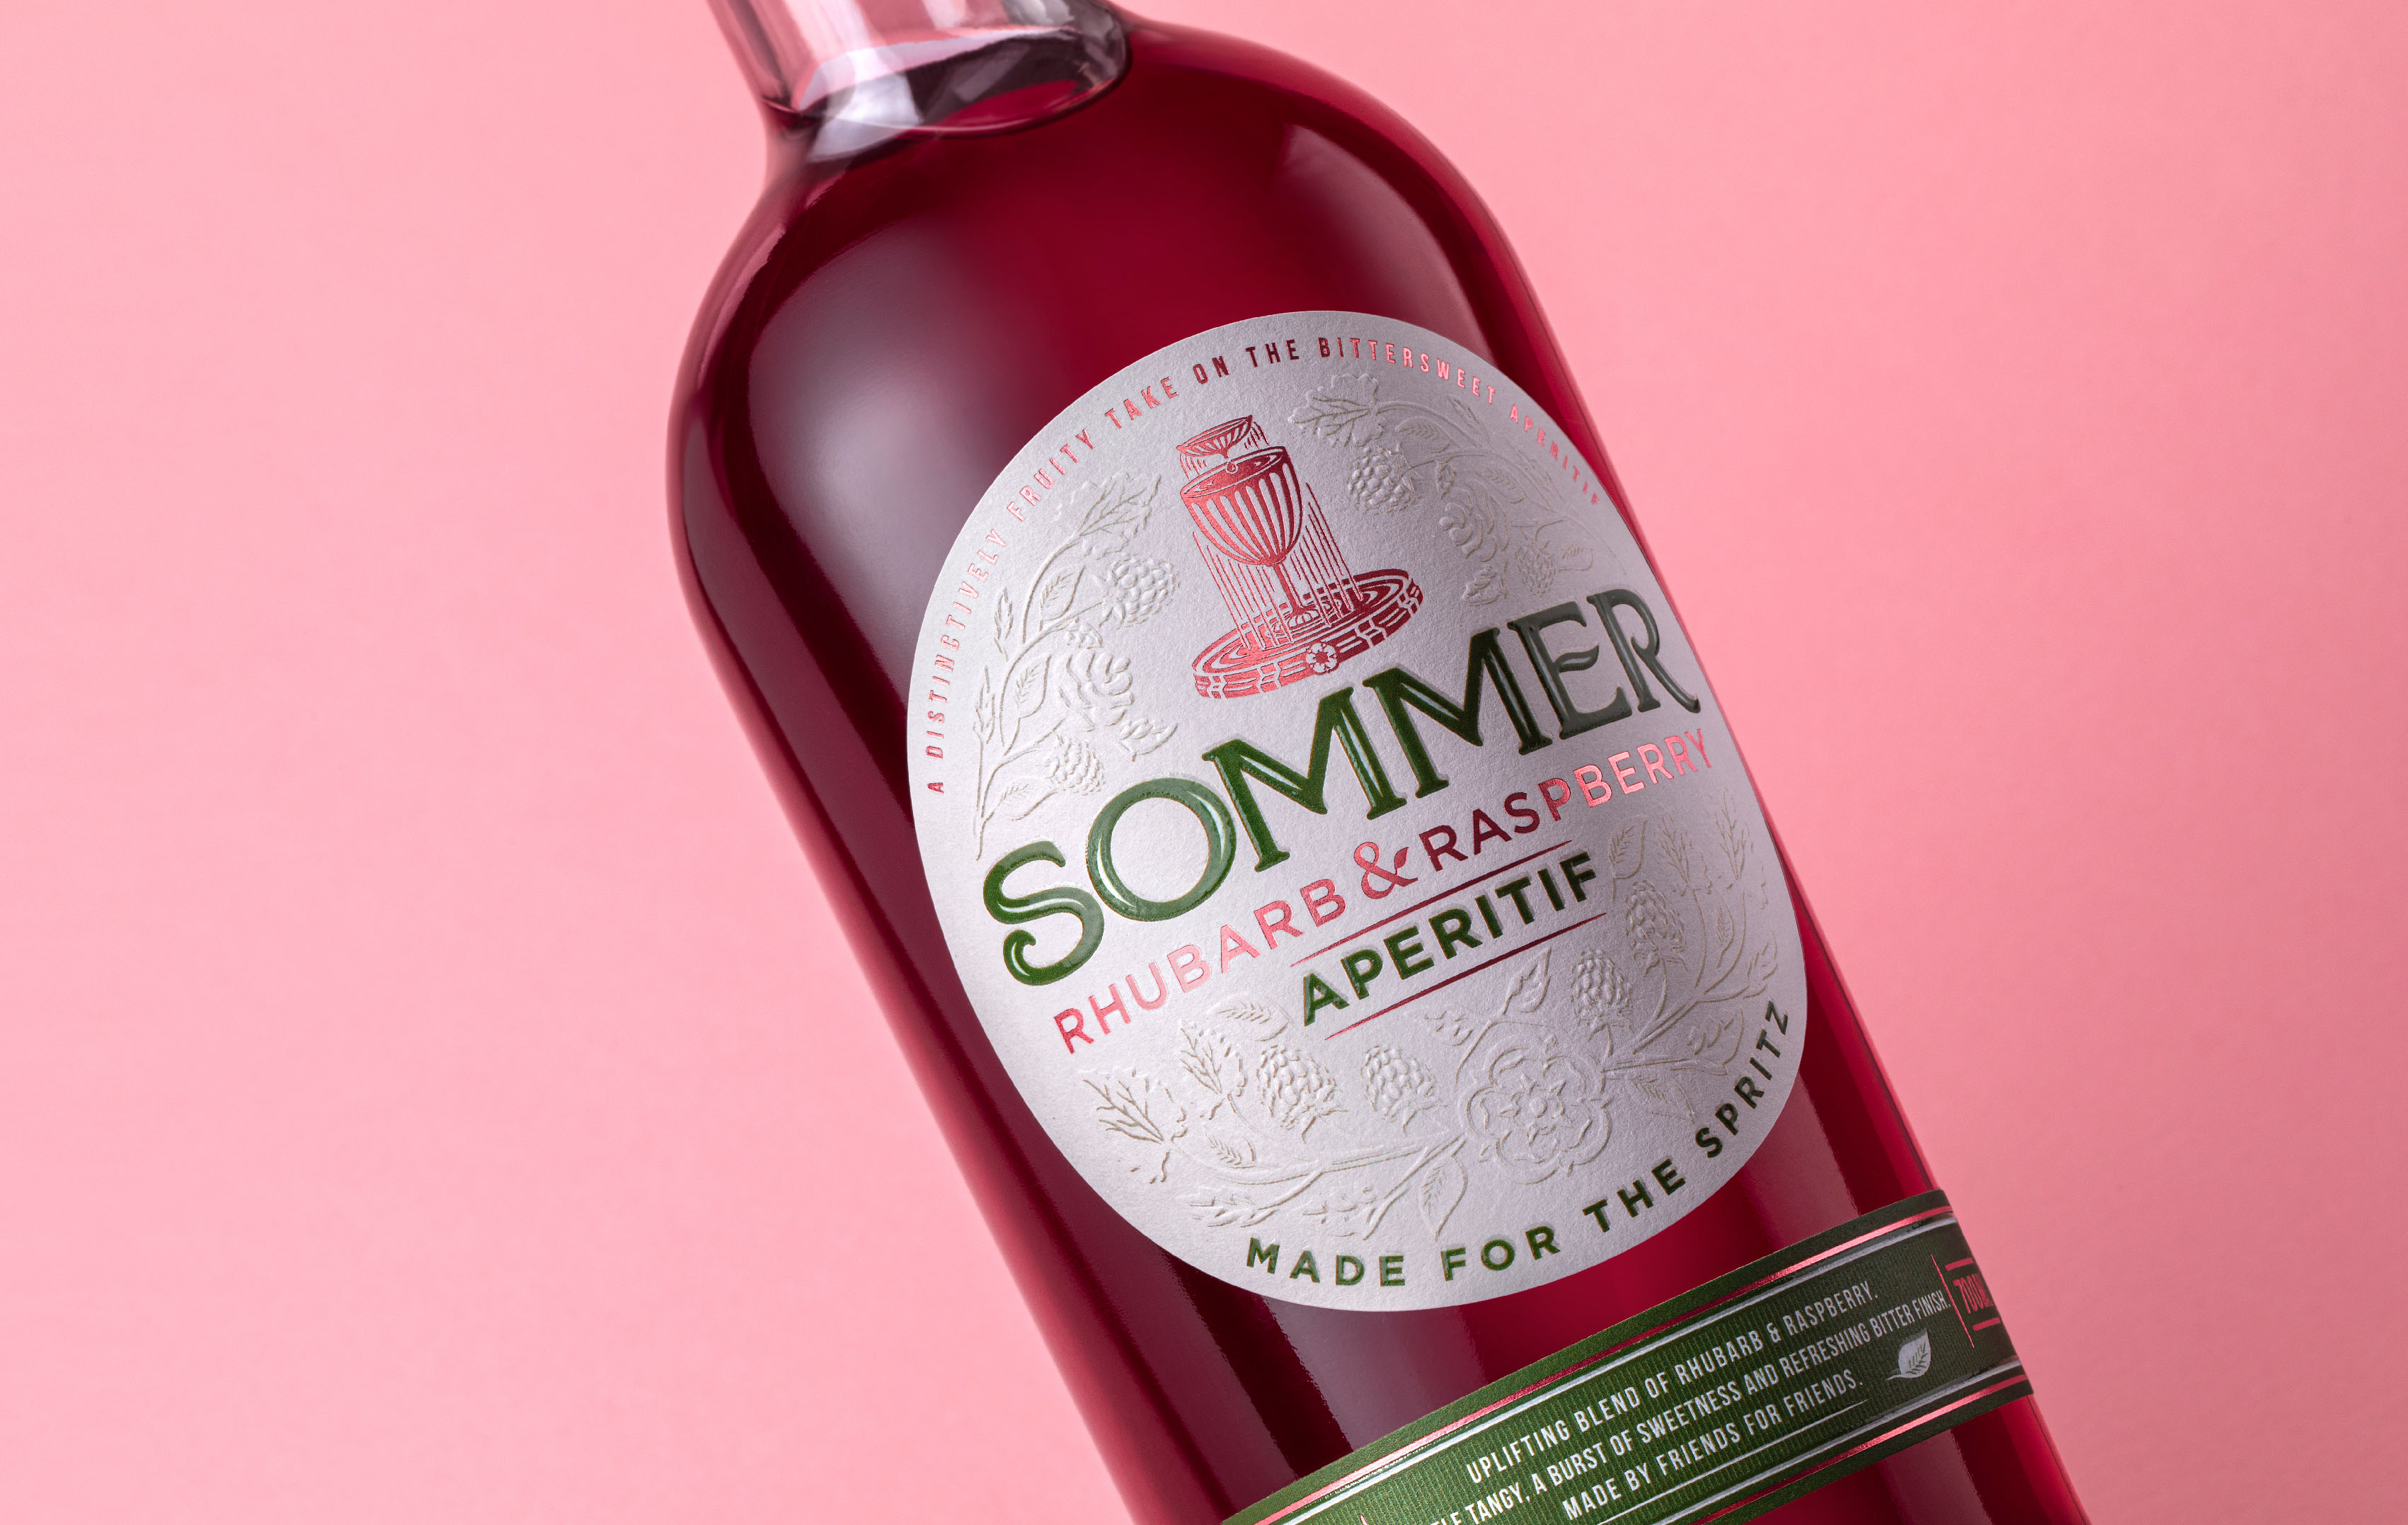 Elegant Packaging and Brand Identity for Sommer Rhubarb & Raspberry Aperitif